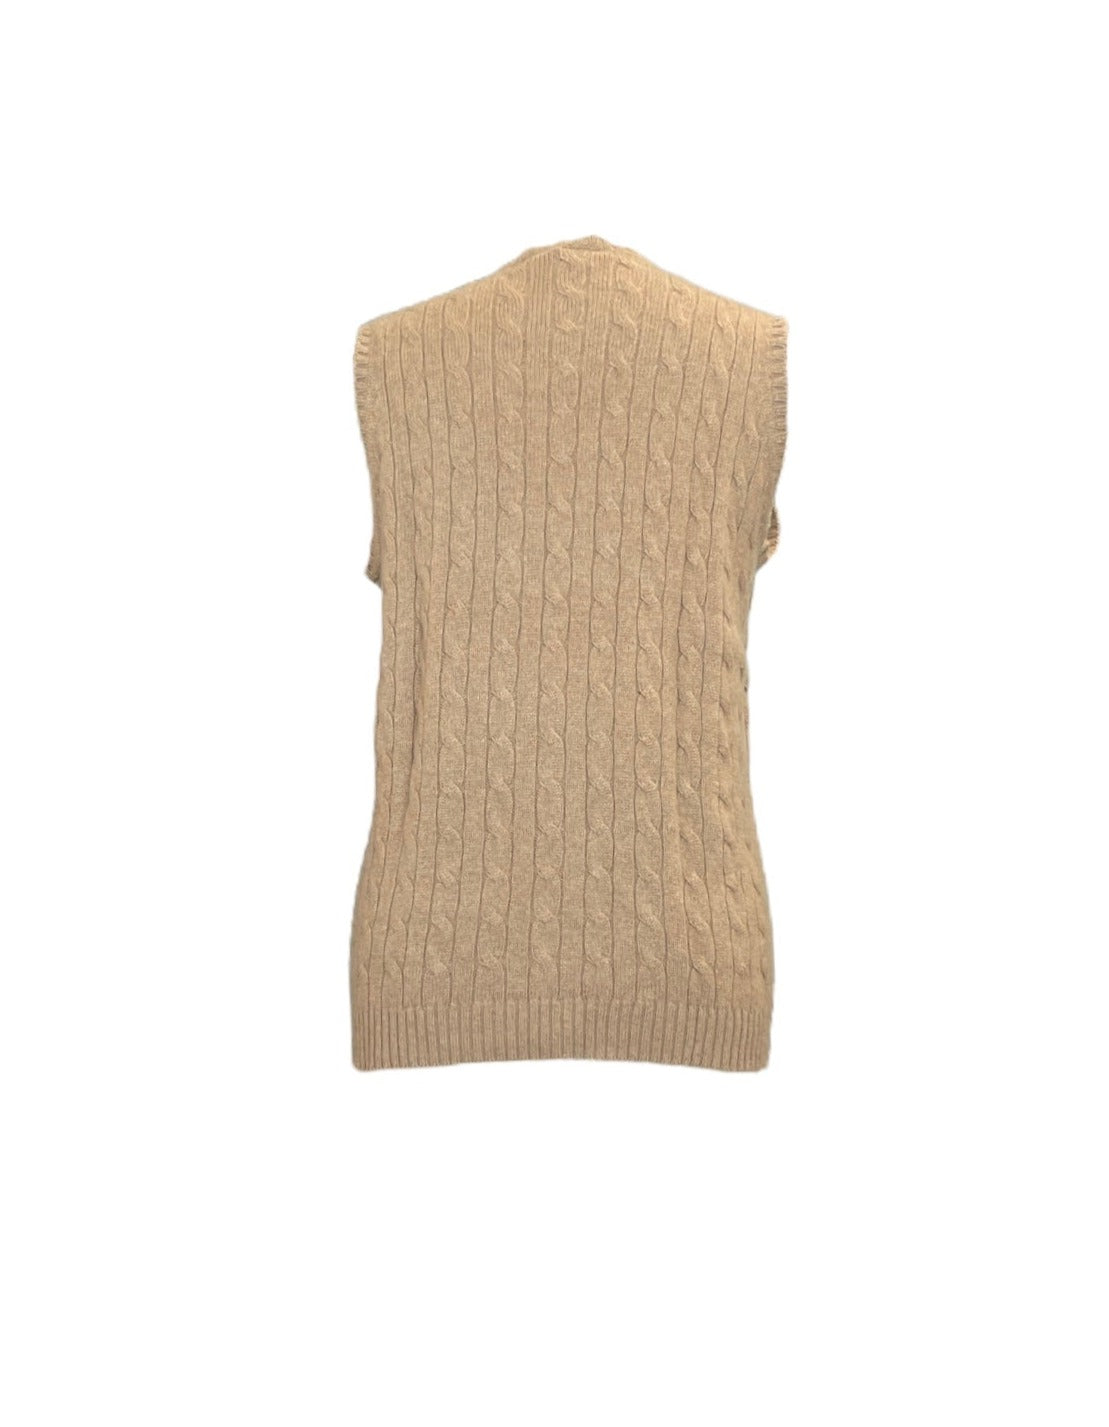 Womens 100% Cashmere Cable Knit Sweater Vest - M